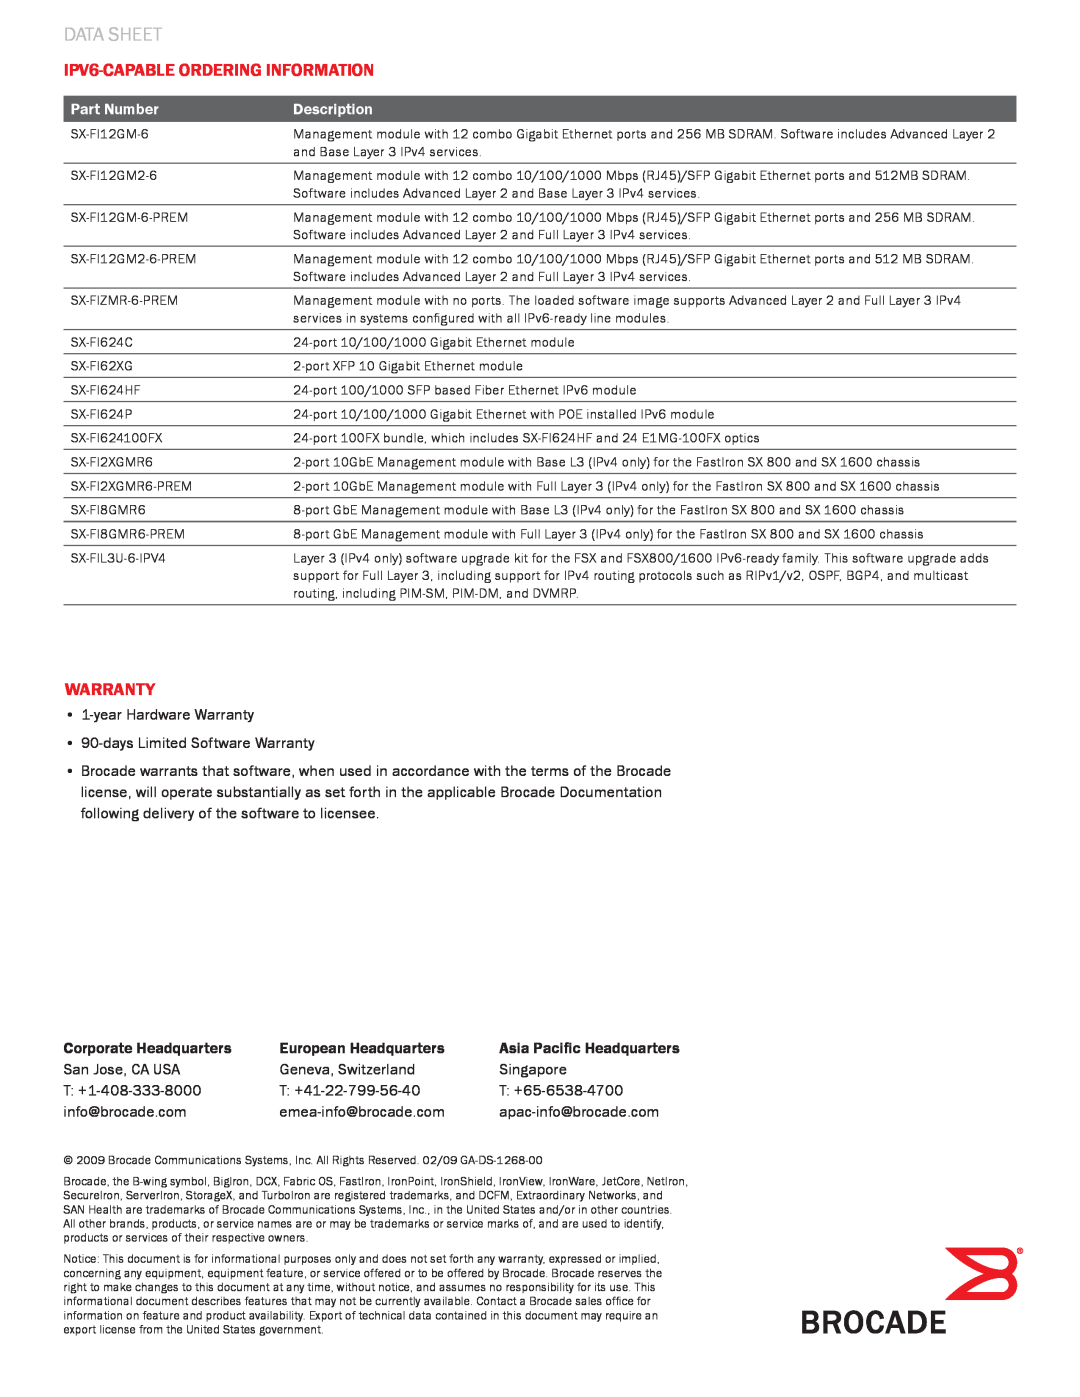 Cisco Systems Superx Series manual IPv6-Capable Ordering Information, Warranty, Data Sheet 